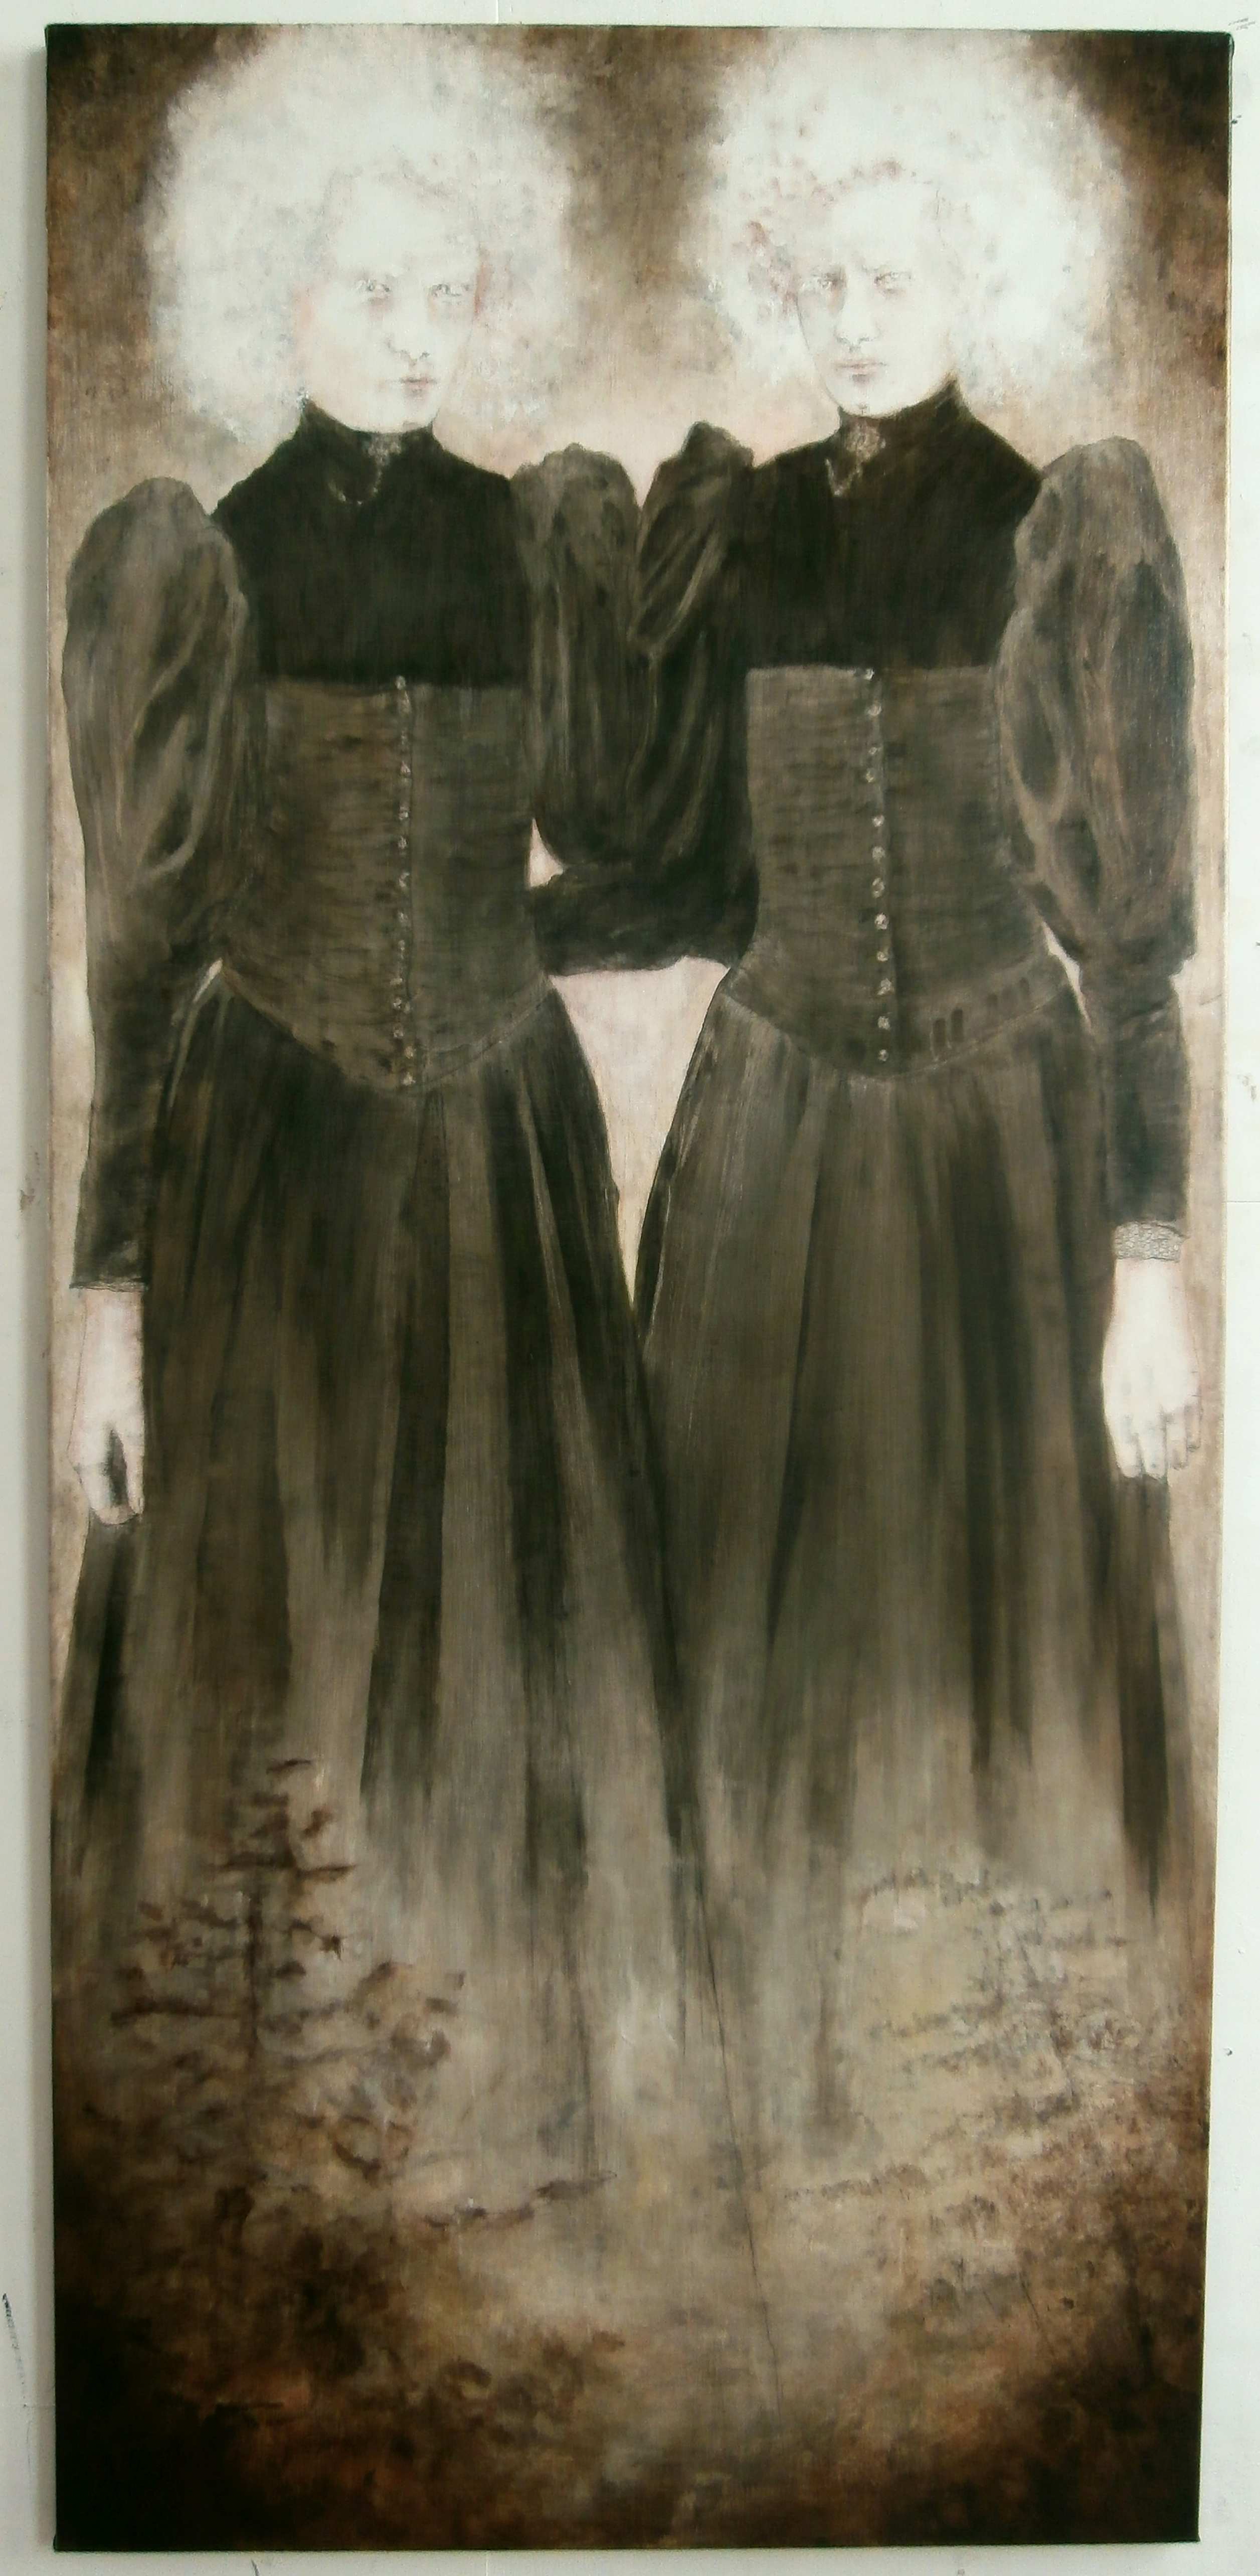 Sisters#3, 190×90 cm, pencil, charcoal, conté and oil on canvas, 2019.